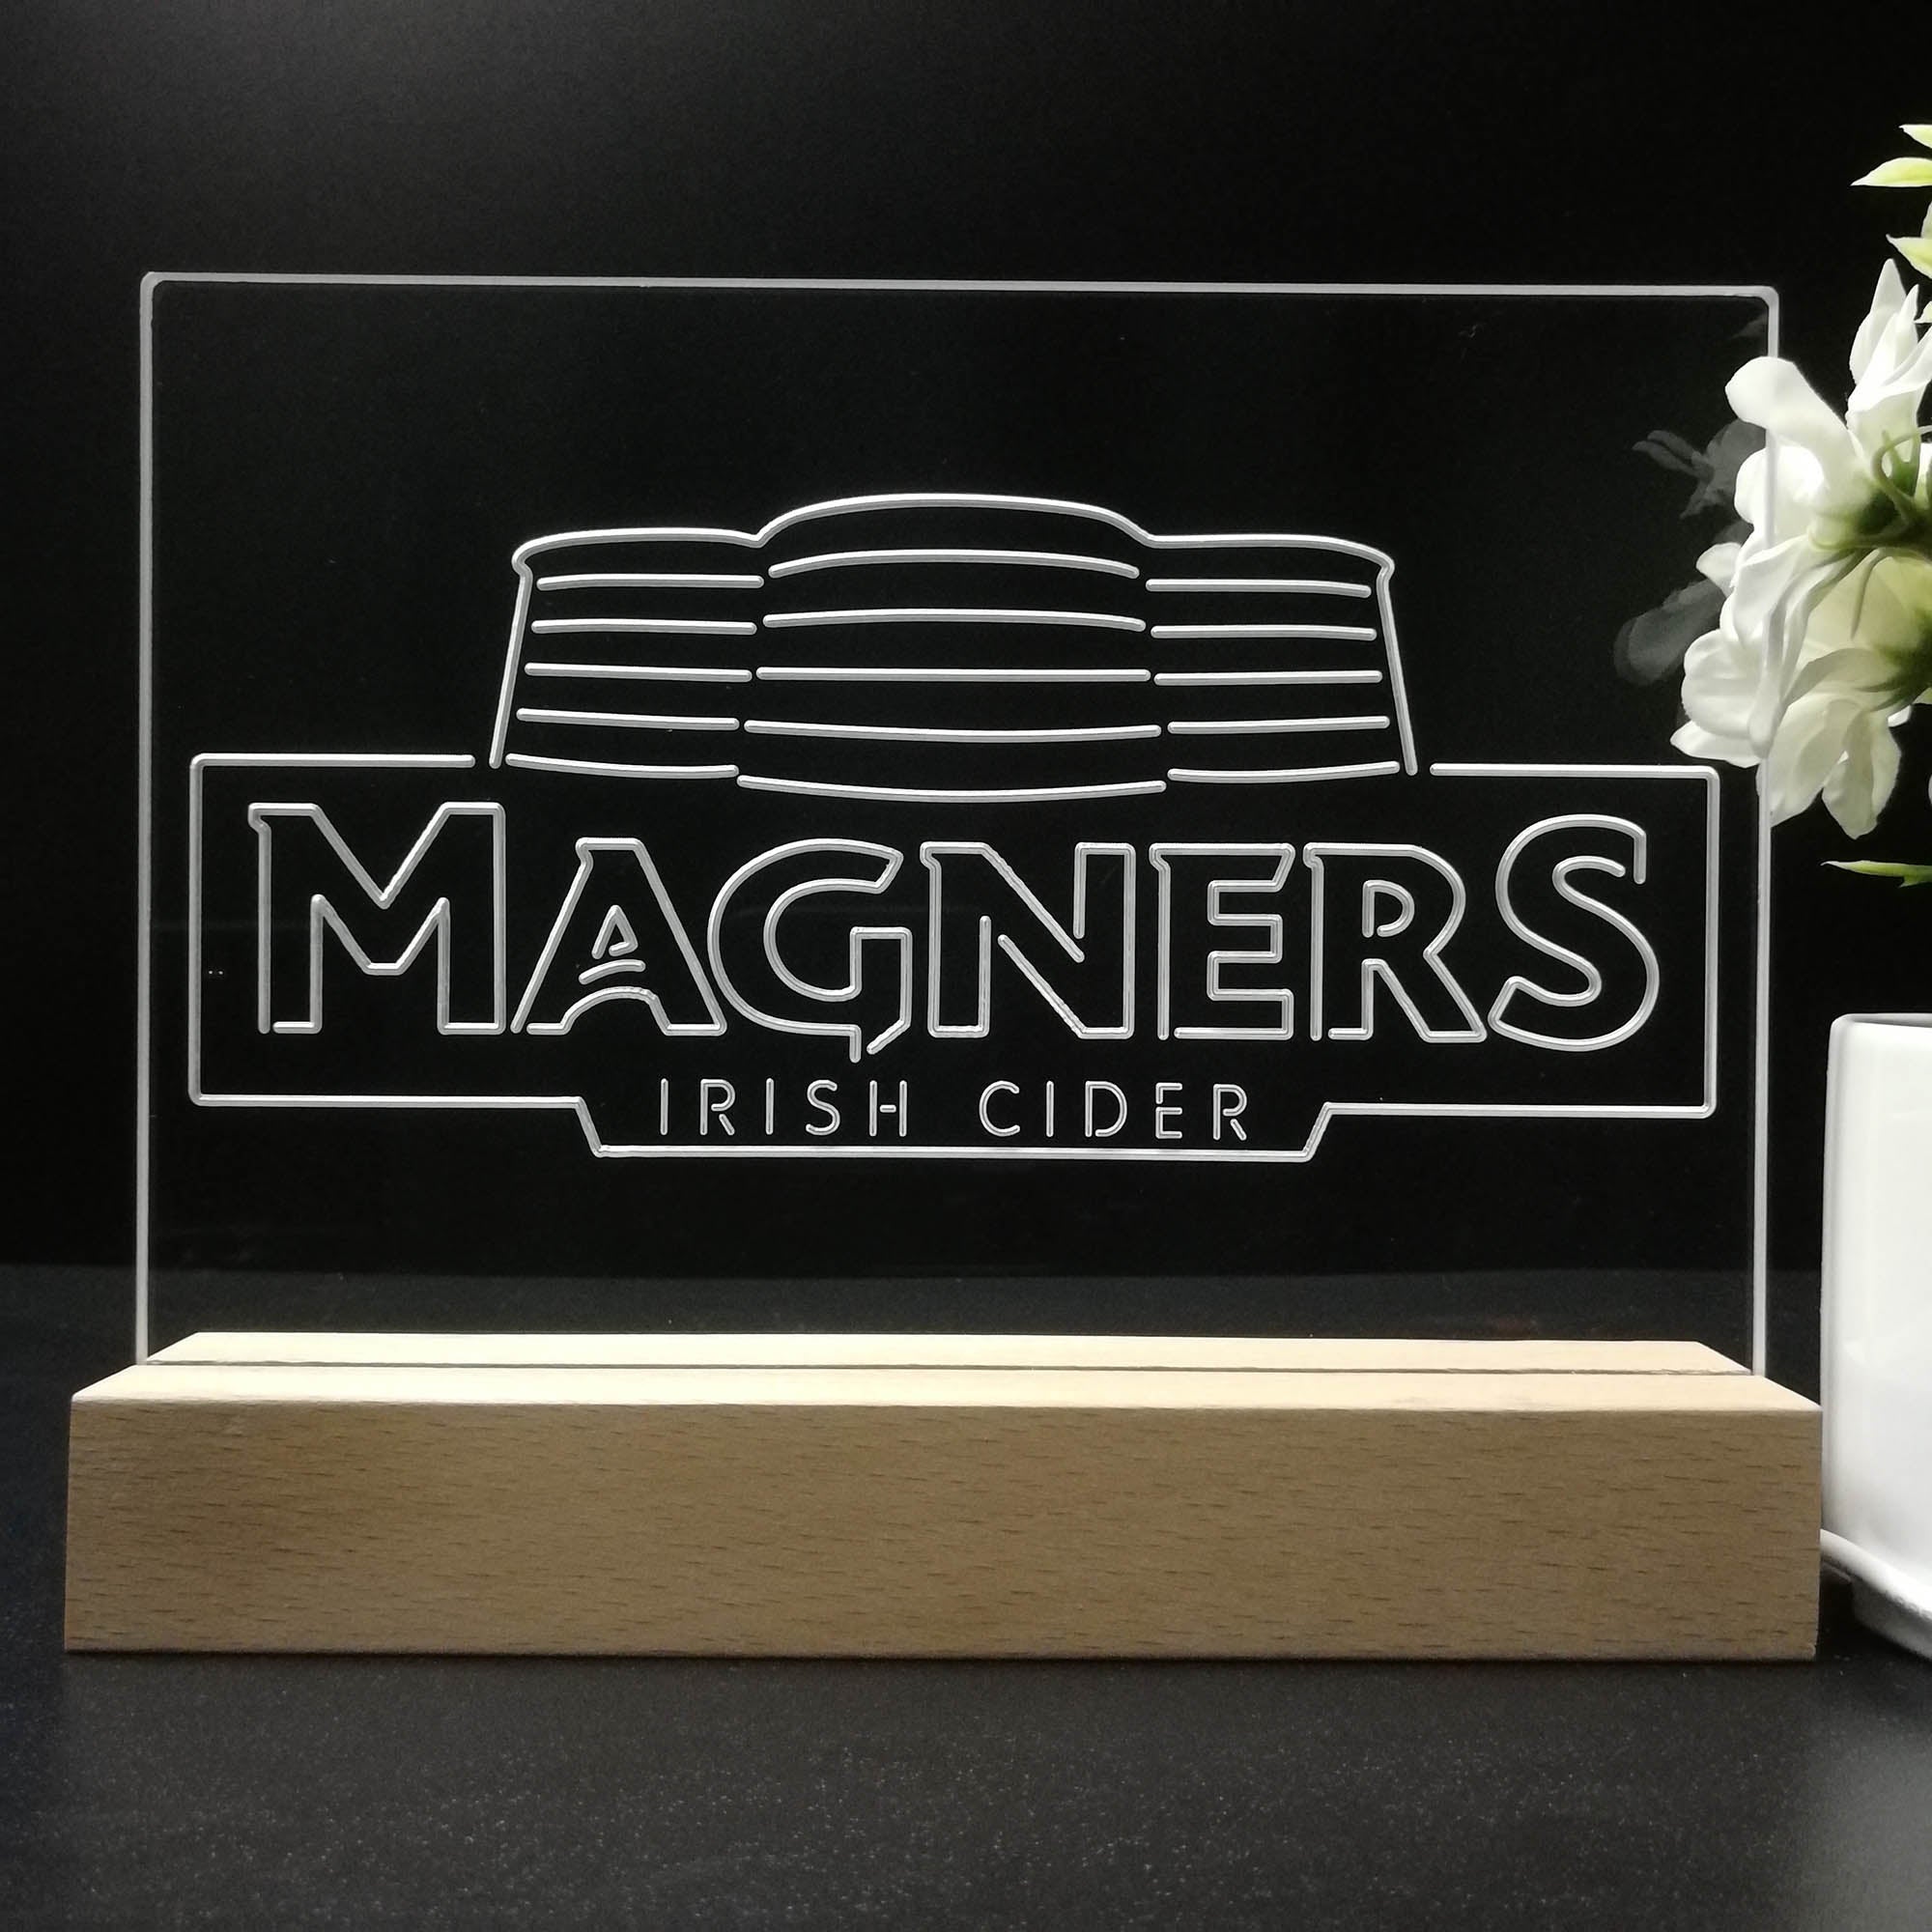 Magners Irish Cider Night Light LED Sign